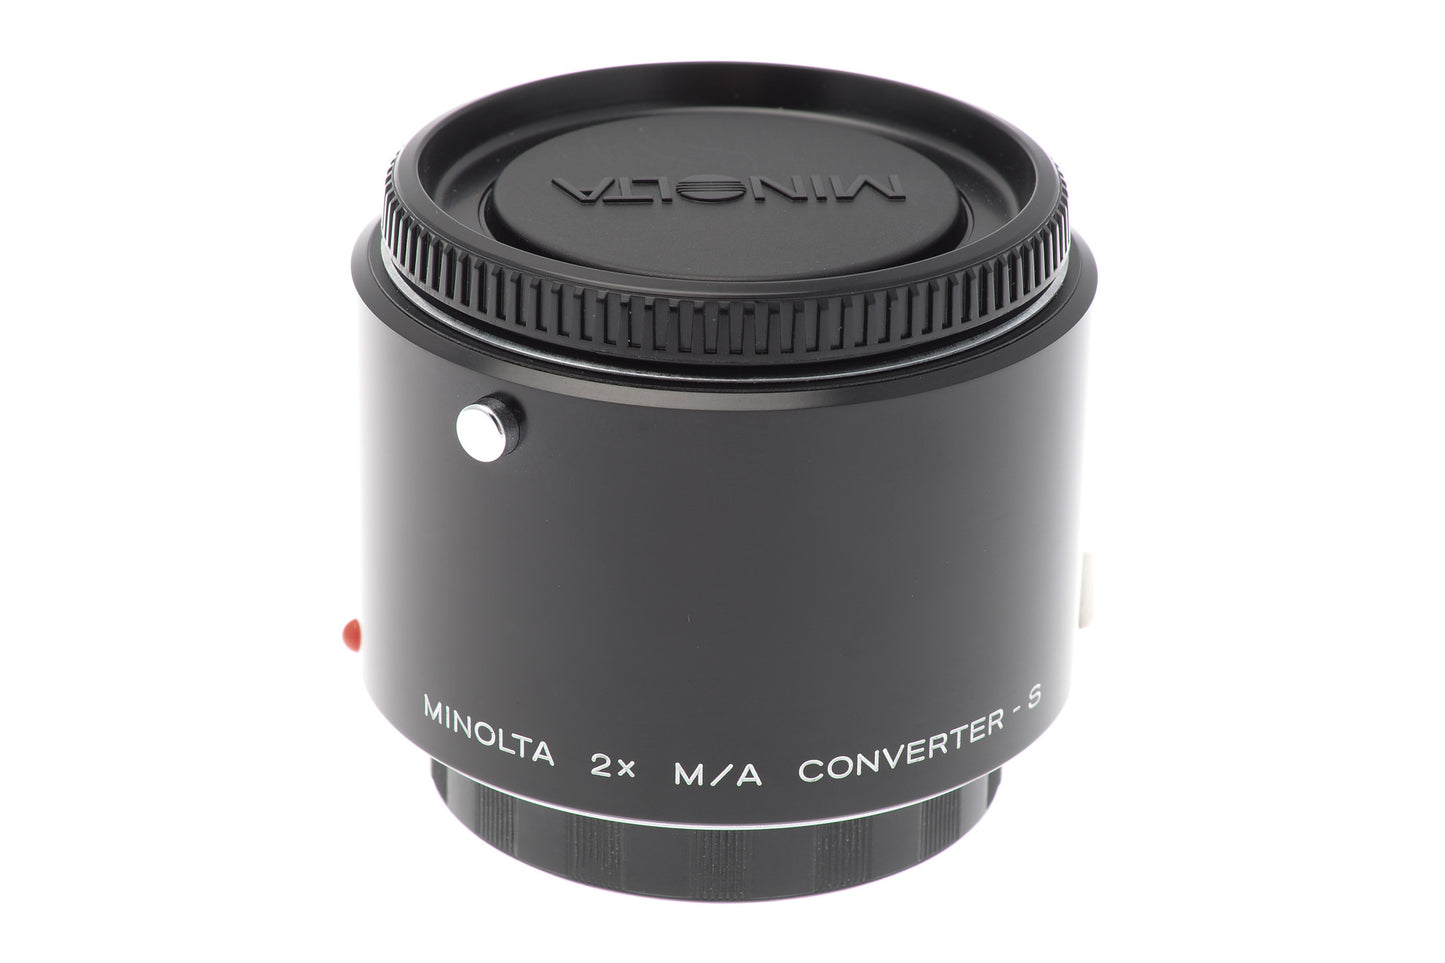 Minolta 2x M/A Converter-S (MD - Minolta AF/Sony A) - Accessory